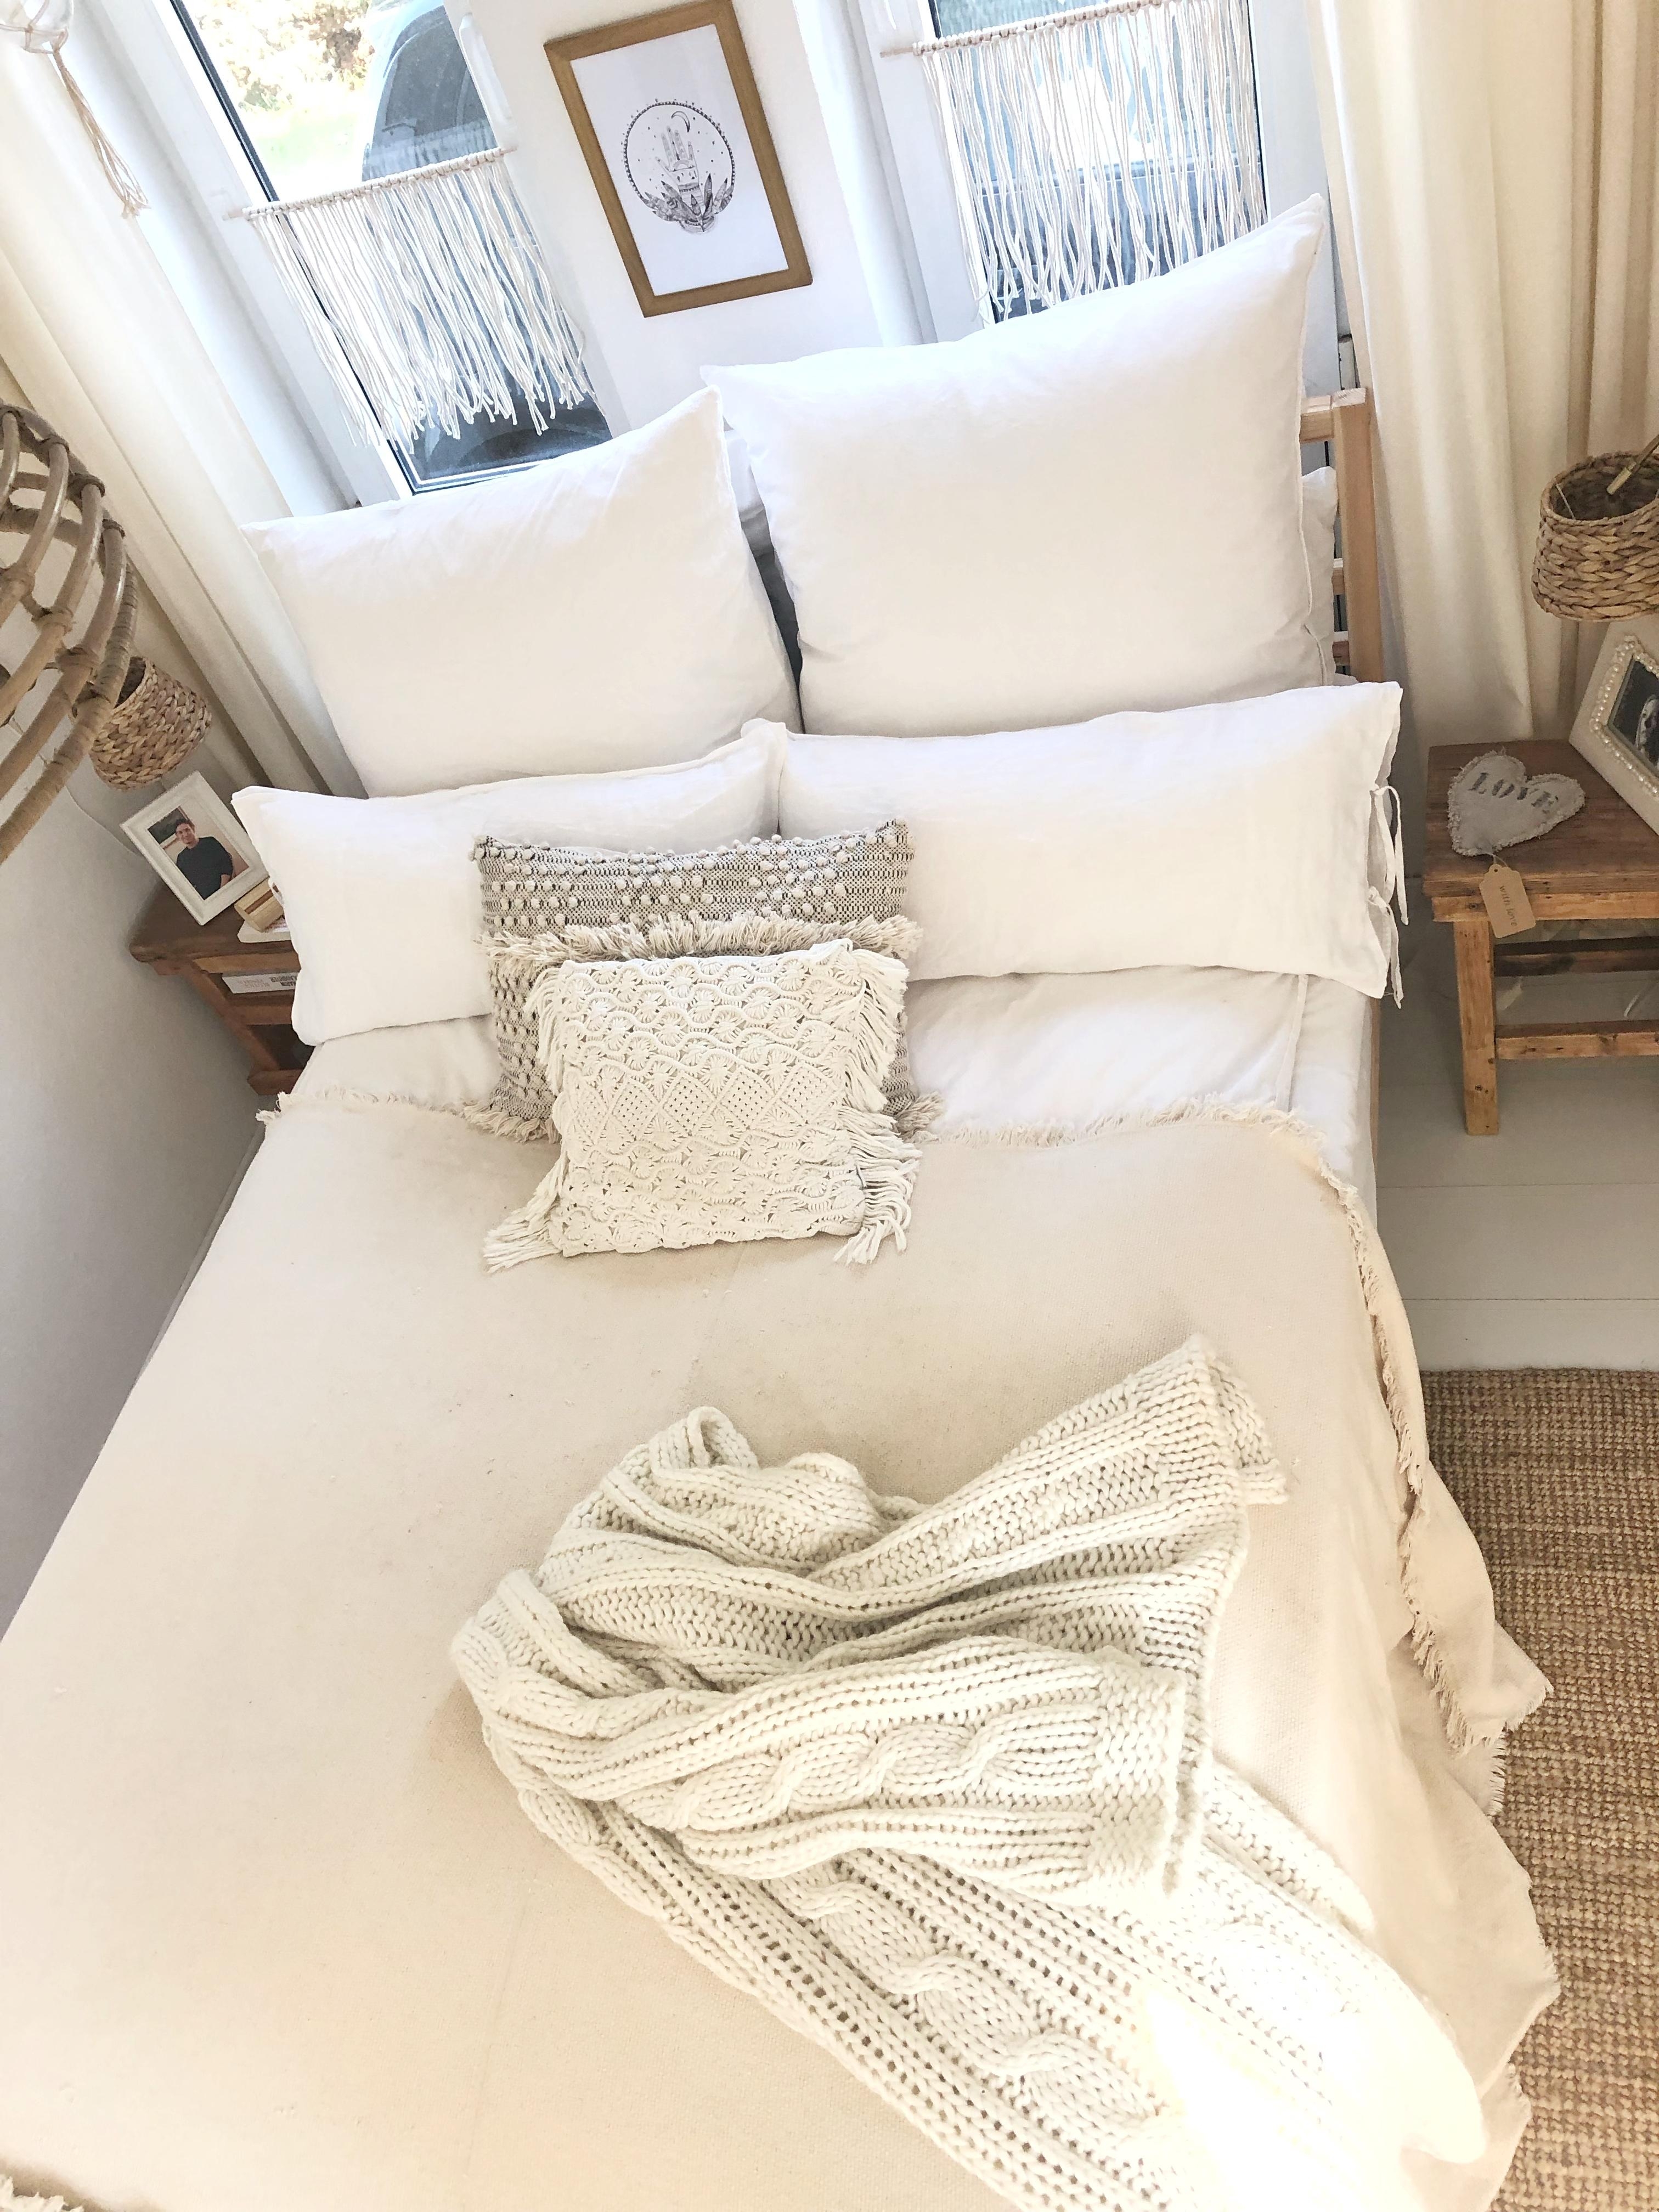 Vogelperspektive 😊
#bedroom #schlafzimmer #boho #myhome #sundaymood #couchstyle